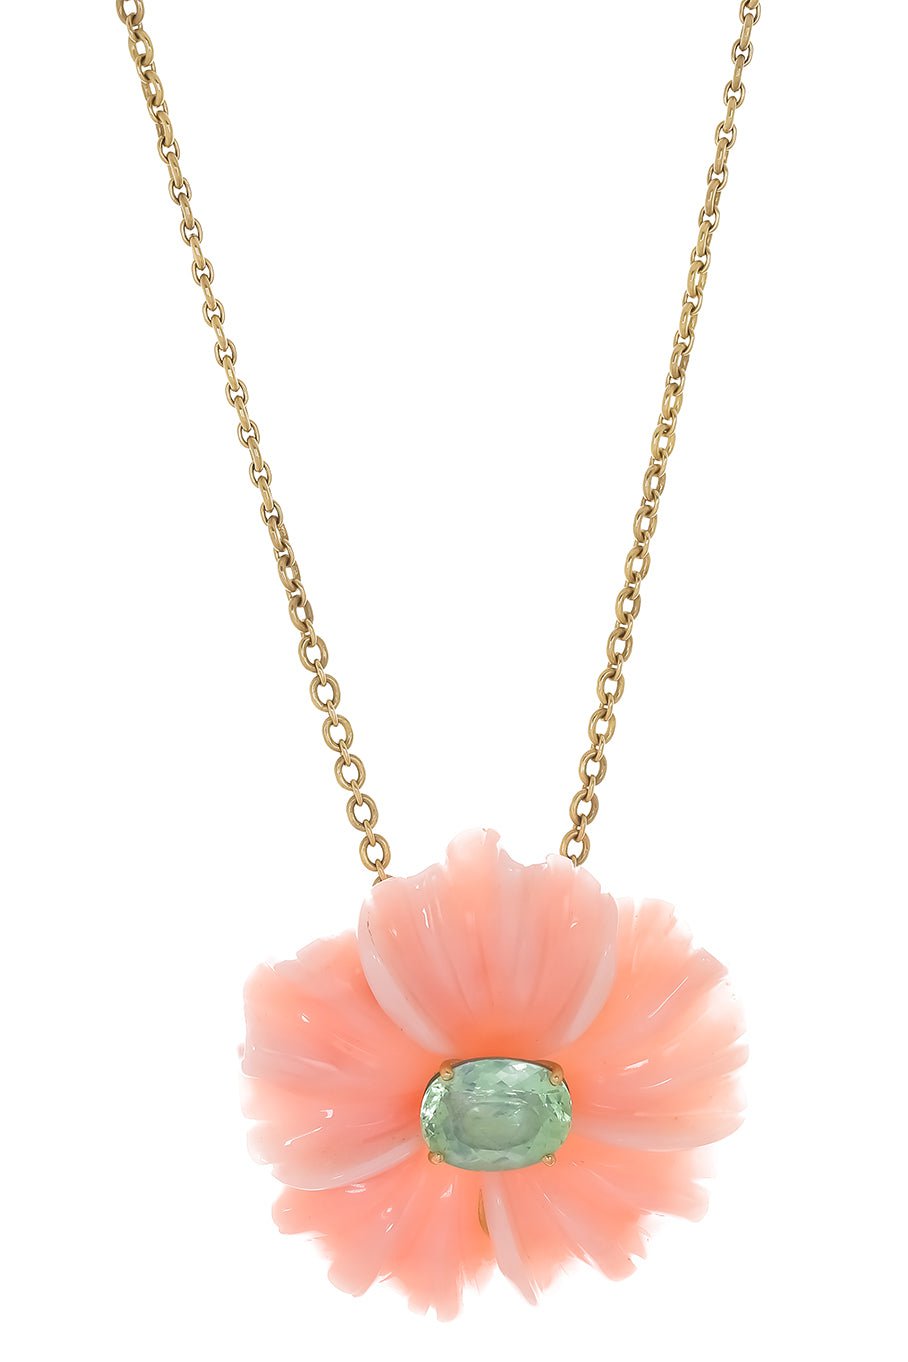 IRENE NEUWIRTH JEWELRY-Pink Opal & Green Tourmaline Flower Necklace-YELLOW GOLD